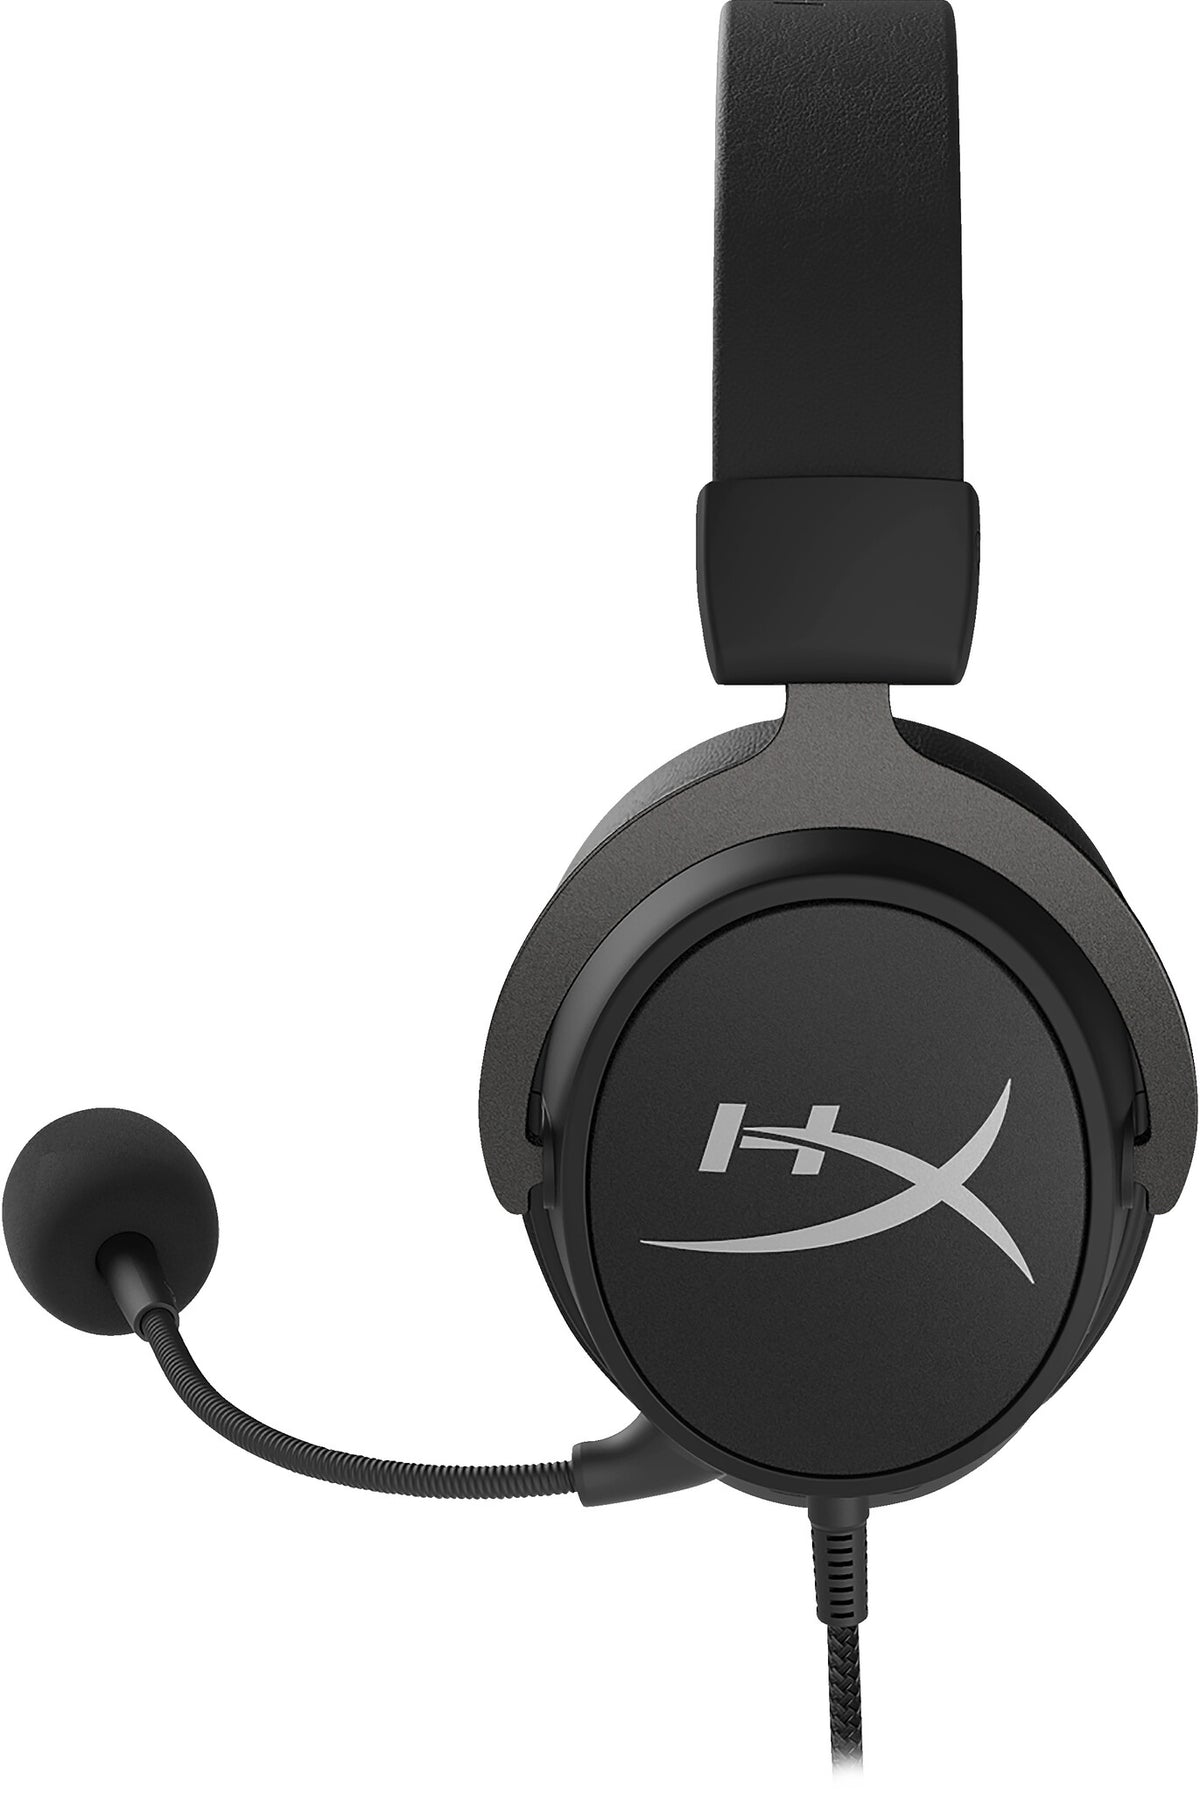 HyperX Cloud MIX - Wireless Bluetooth Gaming Headset